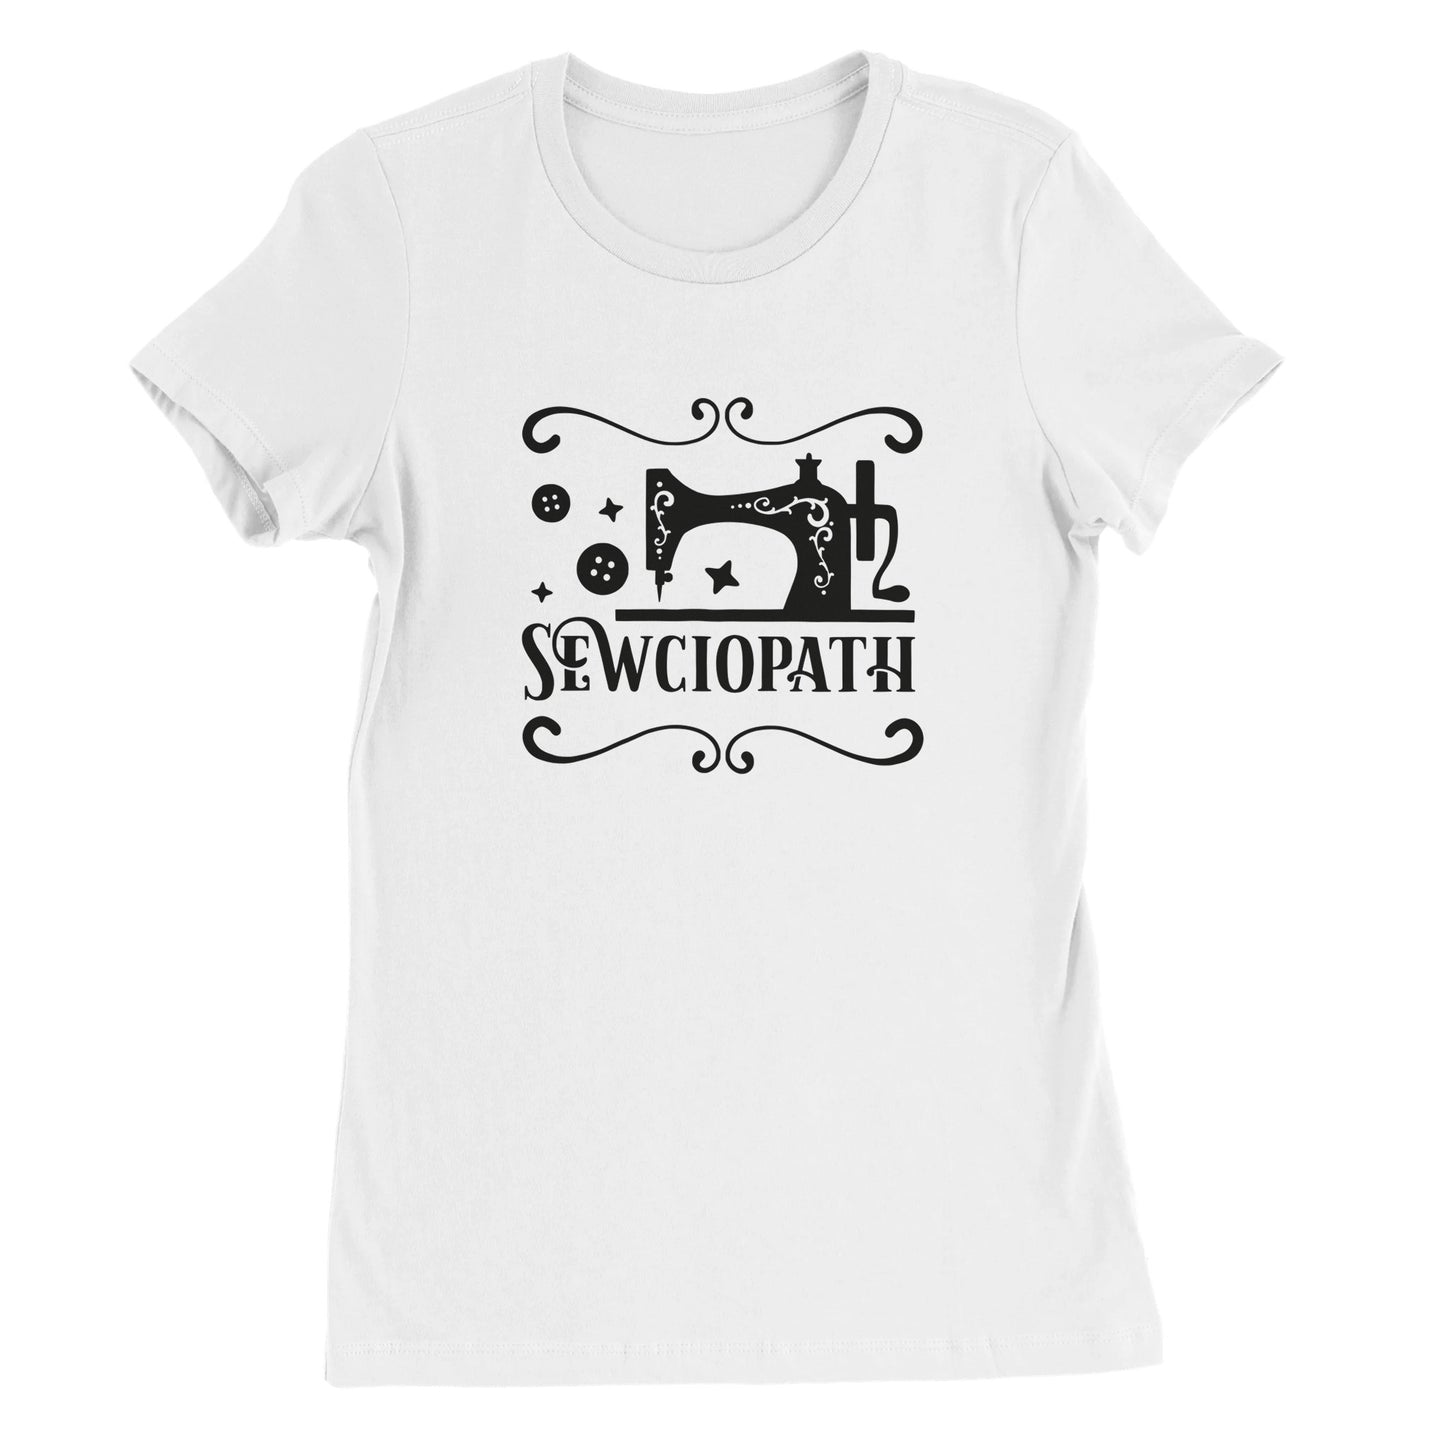 Sewciopath - Premium Women's Crewneck T-shirt